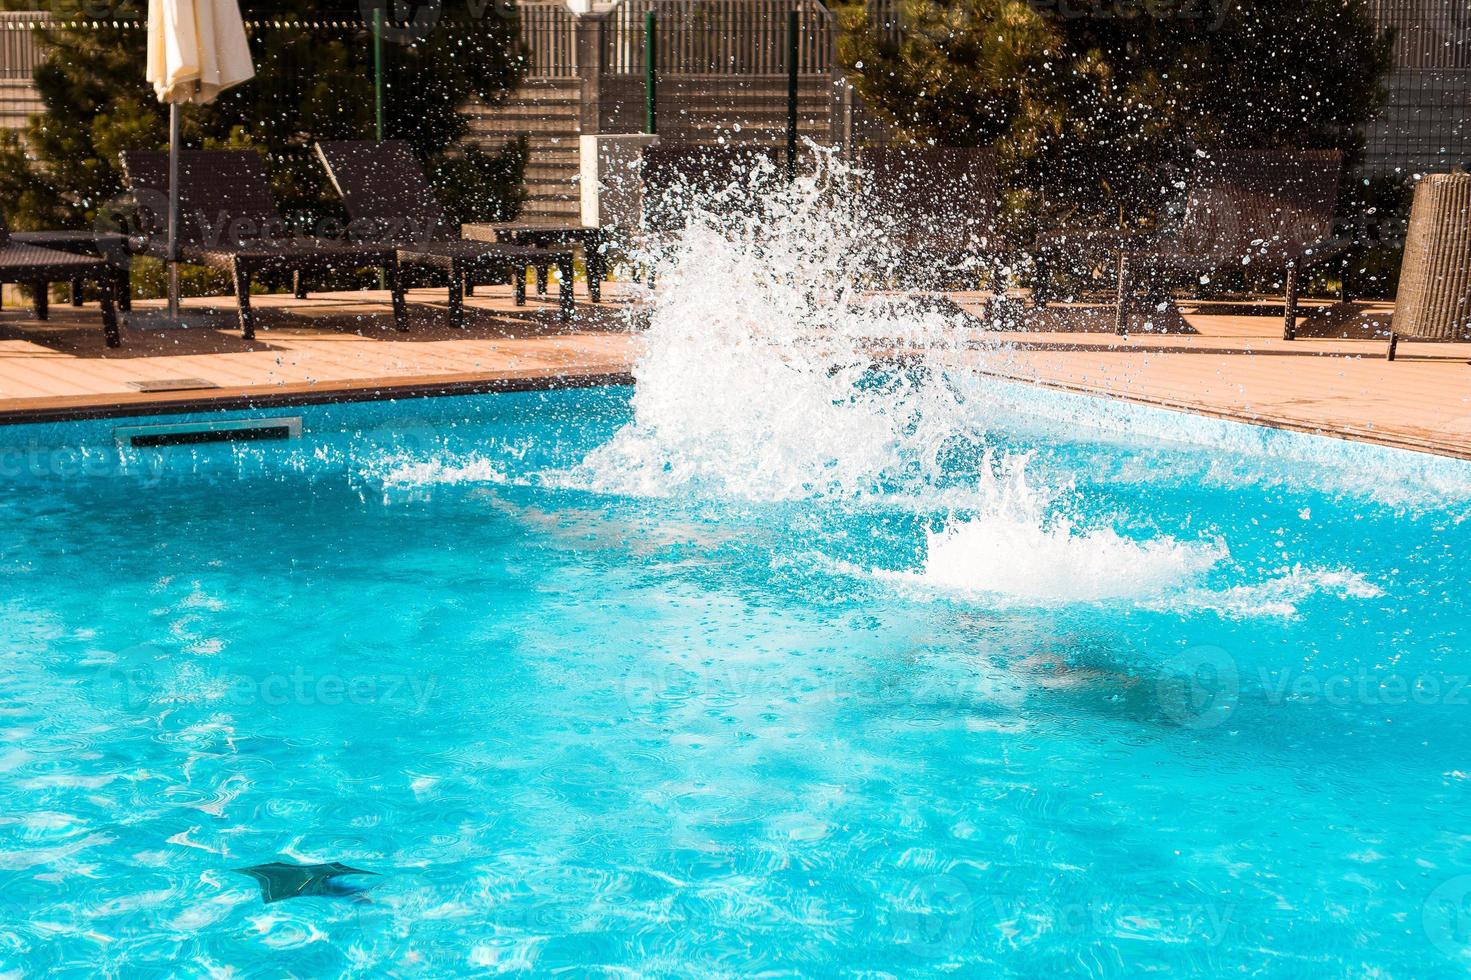 Pool fun. Jumping into the outdoor swimming pool photo